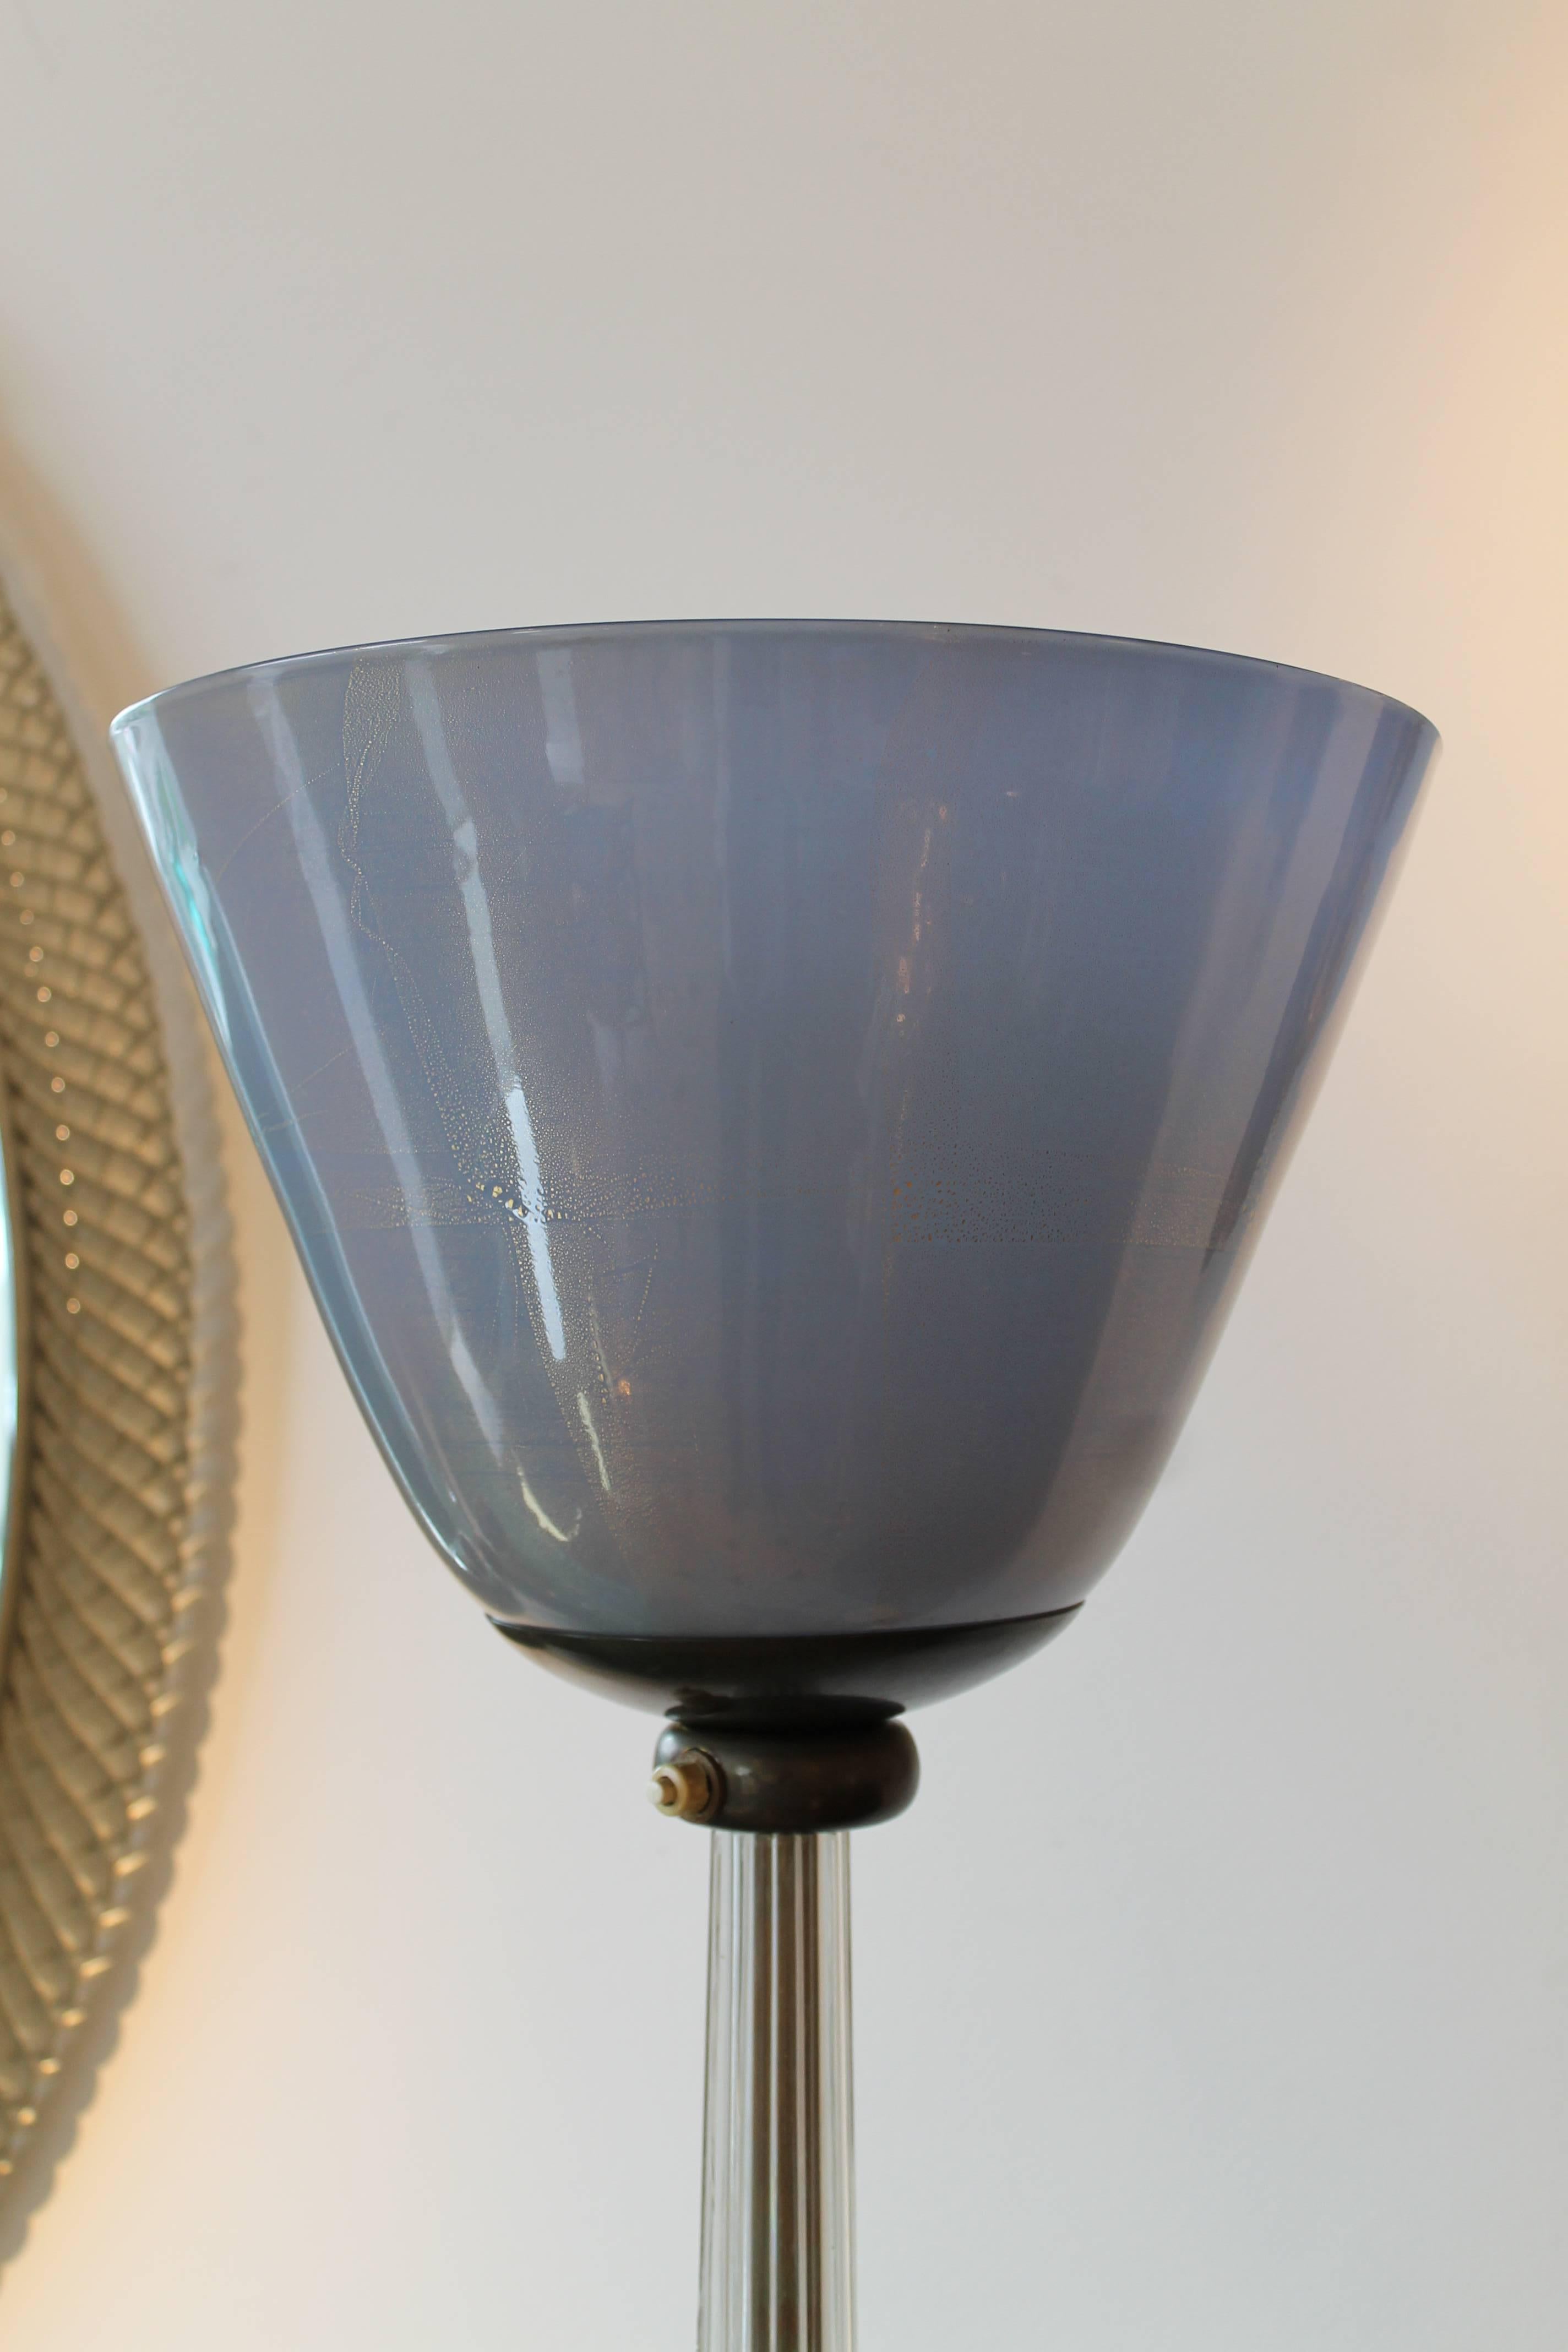 Tomaso Buzzi(1900-1981.)
Floor lamp.
Murano glass, “Alga”Glass 